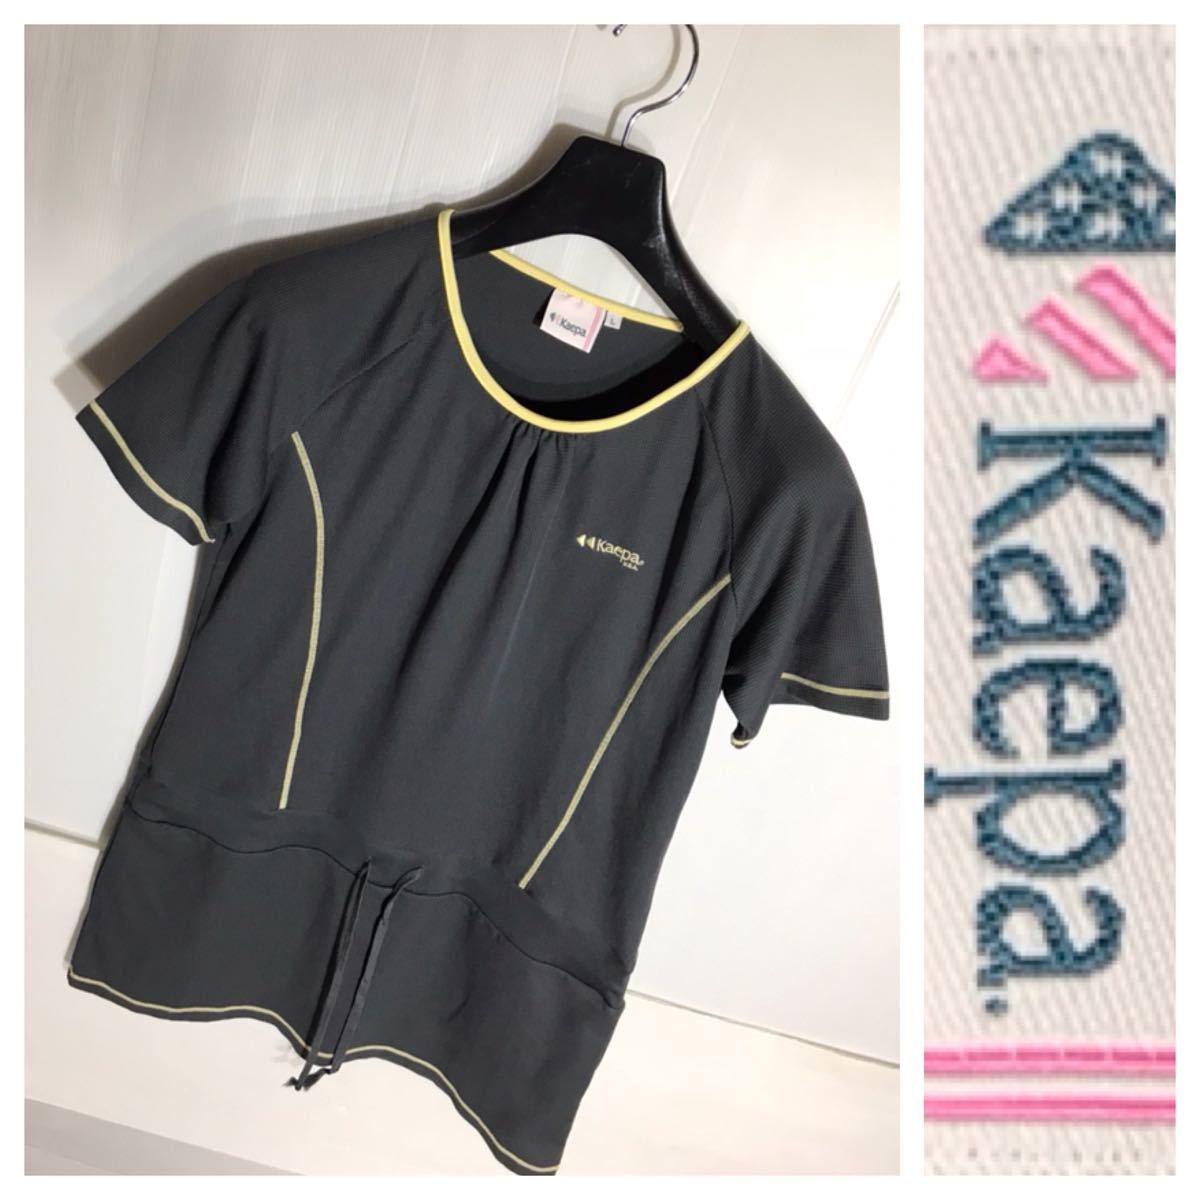 KAPPA Kappa Kei pado cow Sharo go embroidery polyester 100 waist cord mini-length dress Mini One-piece gray . yellow color L